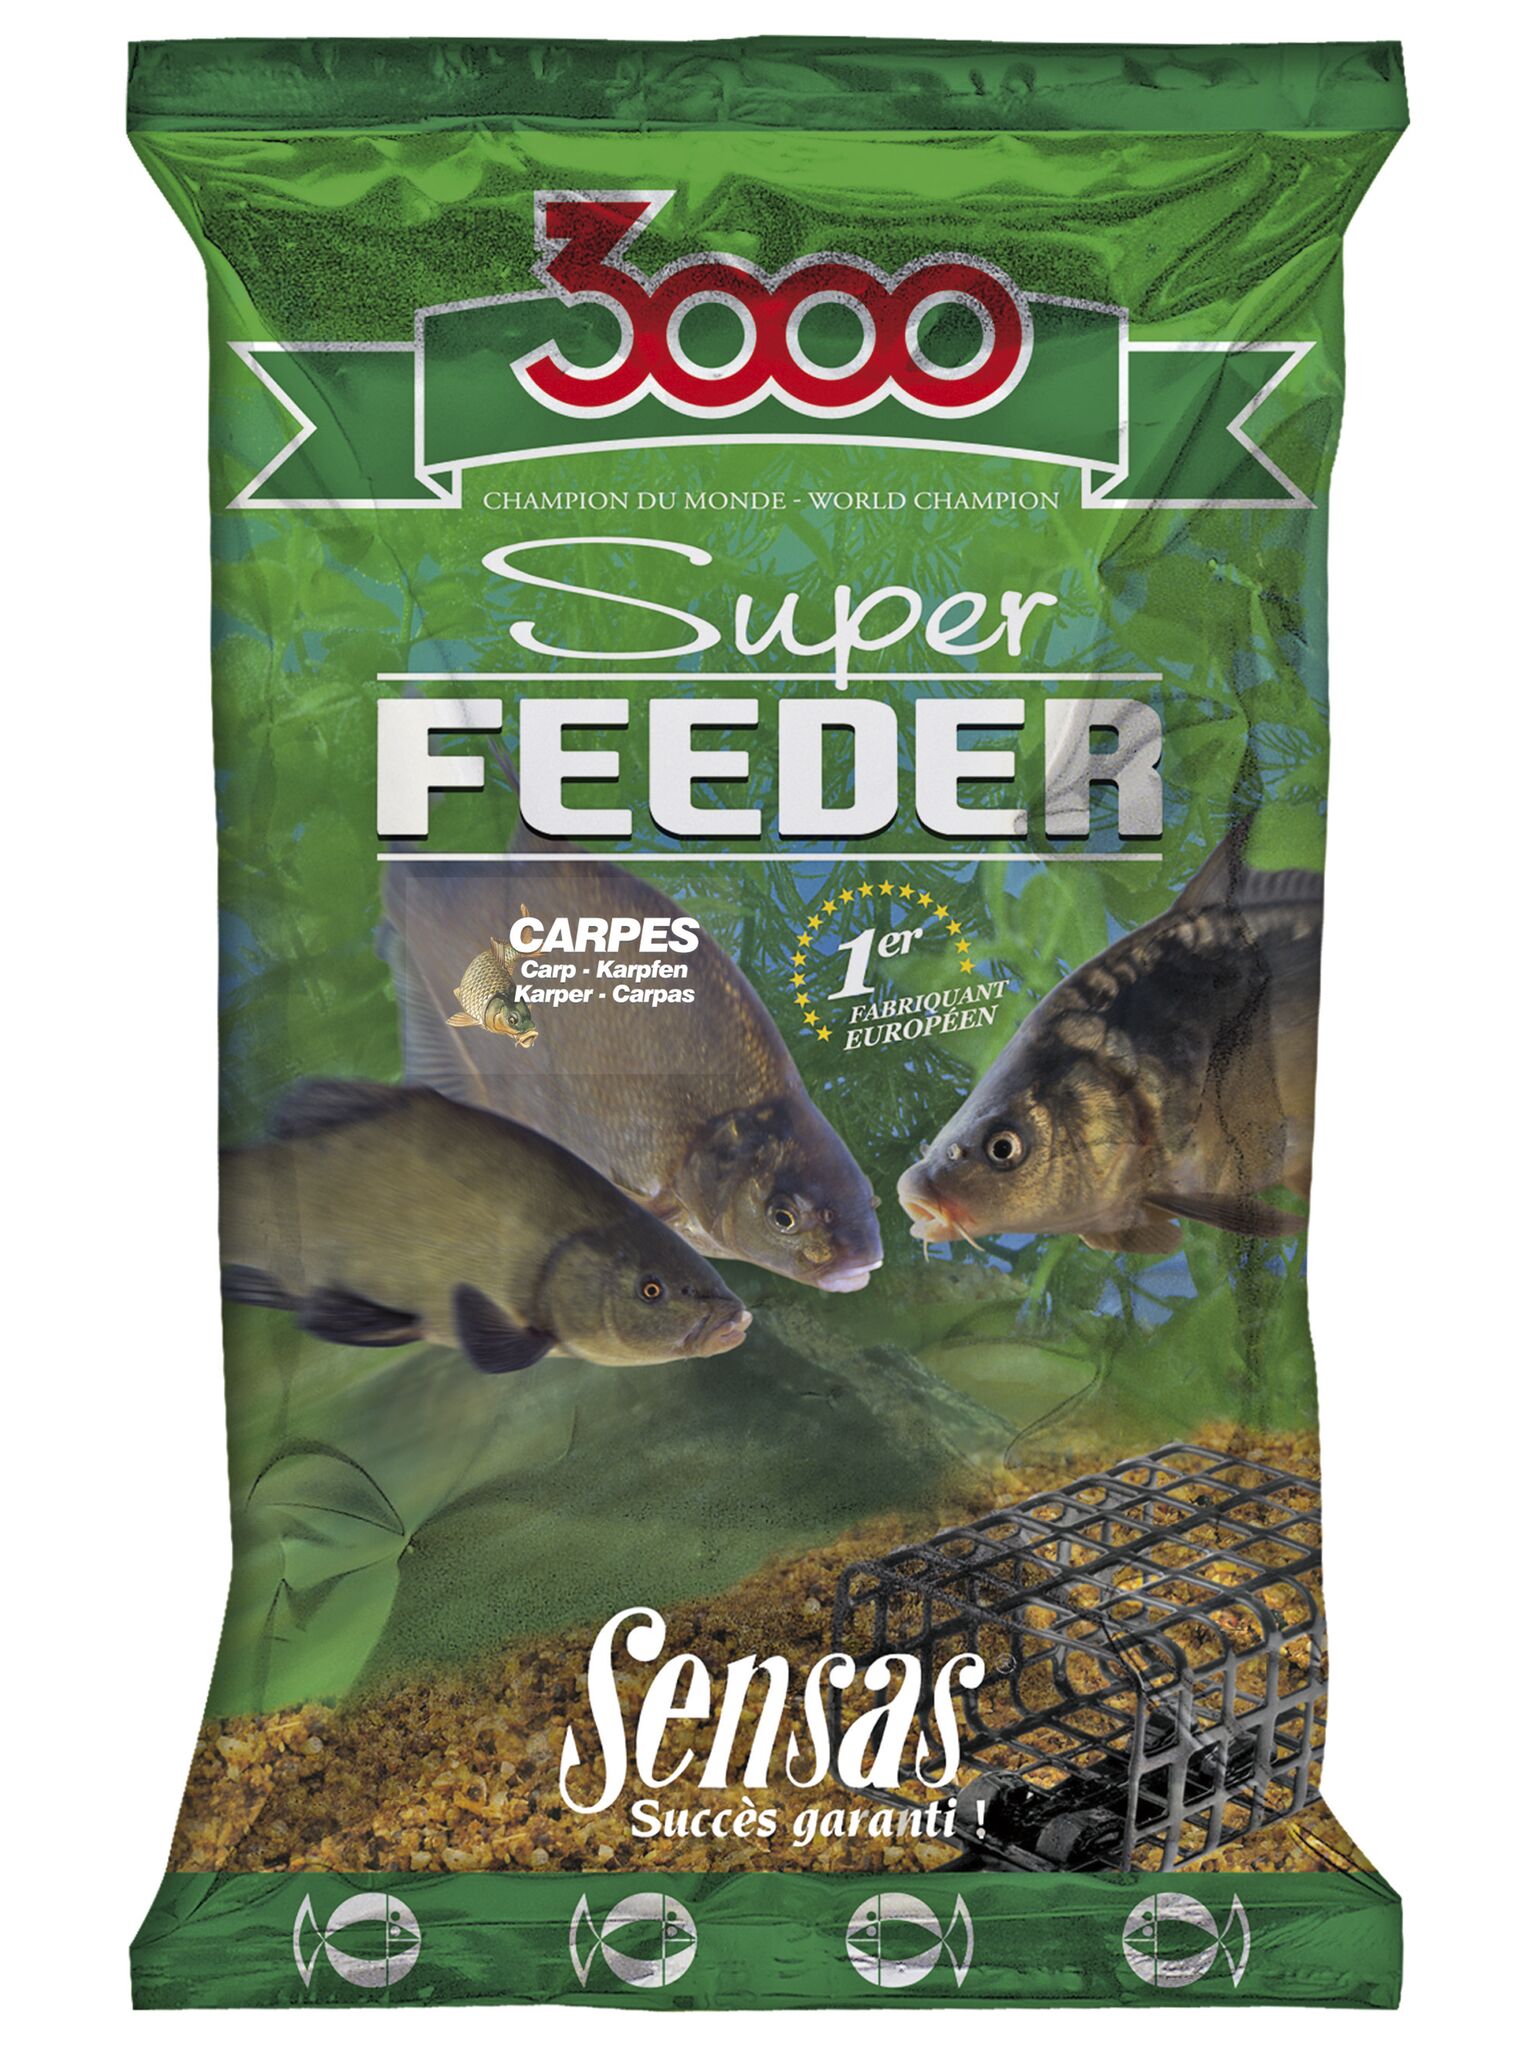 Прикормка Sensas 3000 Super FEEDER Carp 1кг